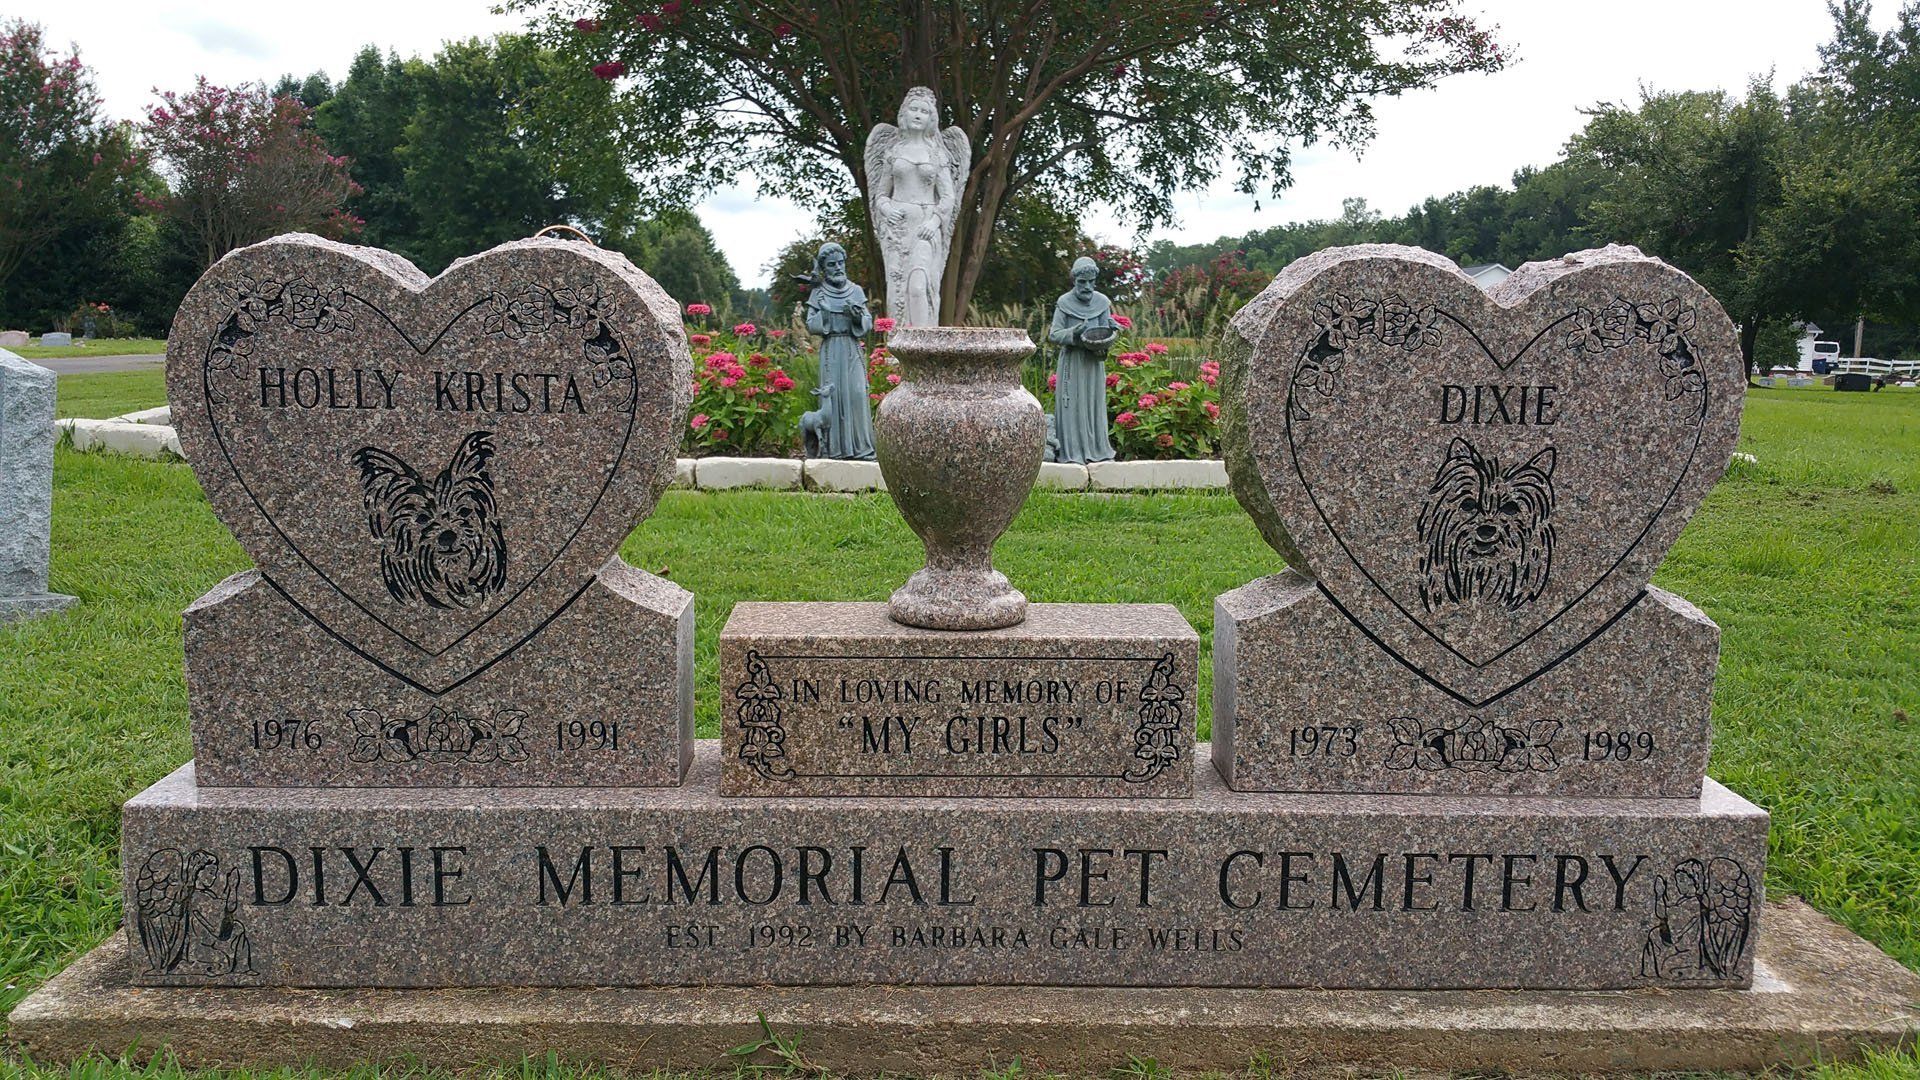 Dixie Memorial Pet Gardens 1